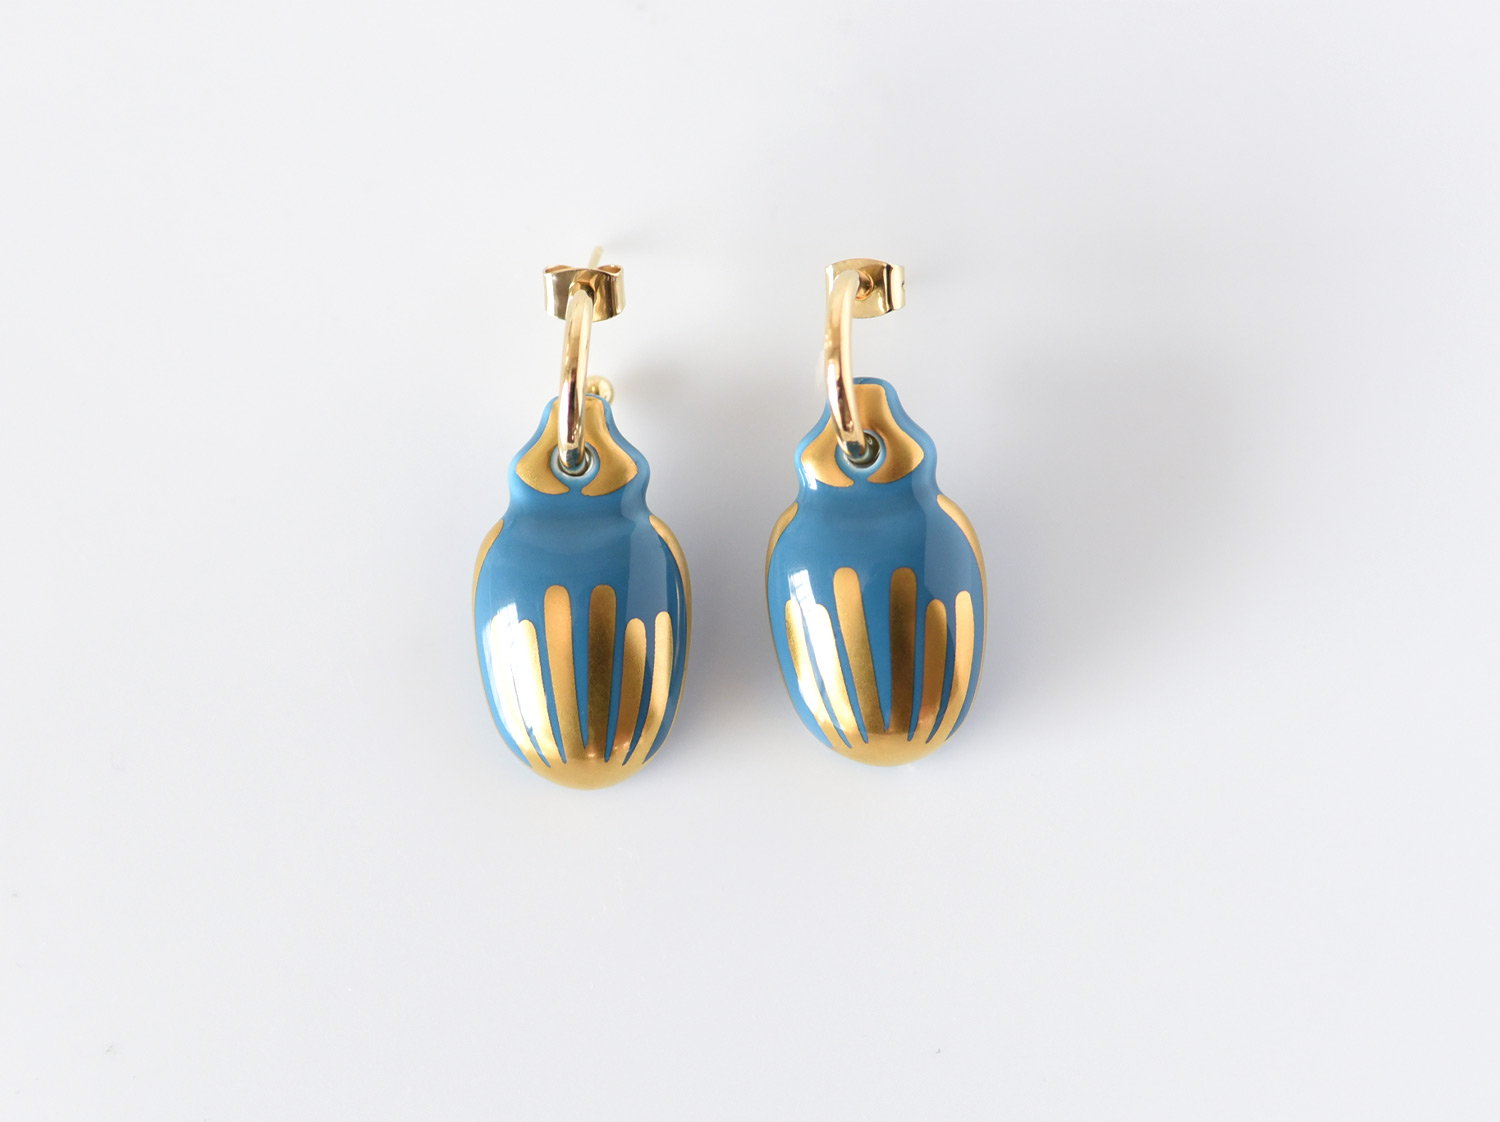 China Scarabée Earrings Blue & Gold of the collection SCARABEE BLEU OR | Bernardaud